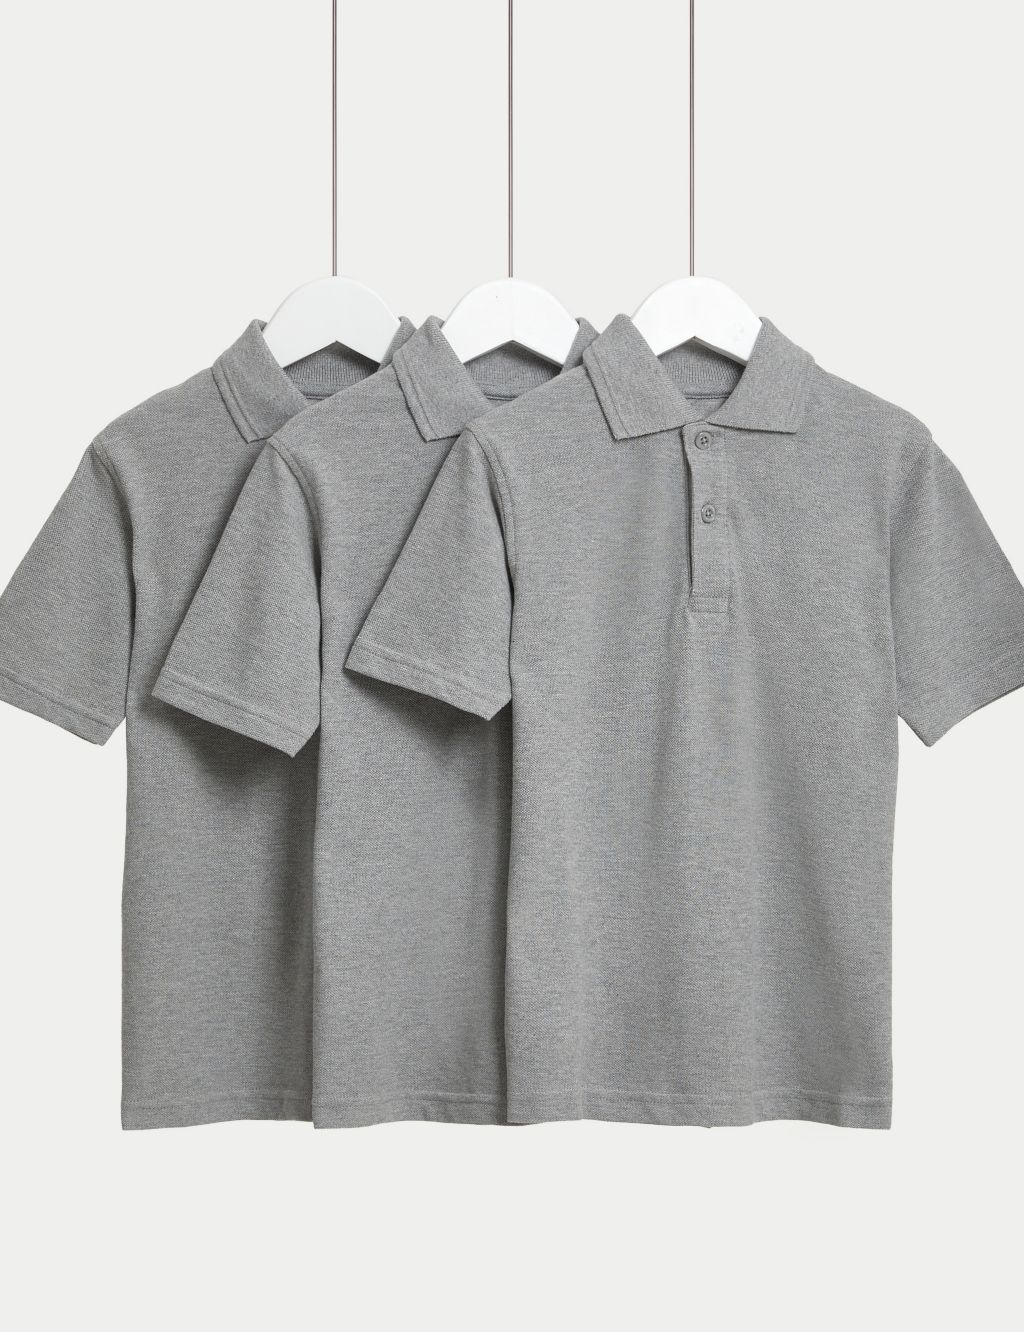 3pk Unisex Stain Resist School Polo Shirts (2-18 Yrs)